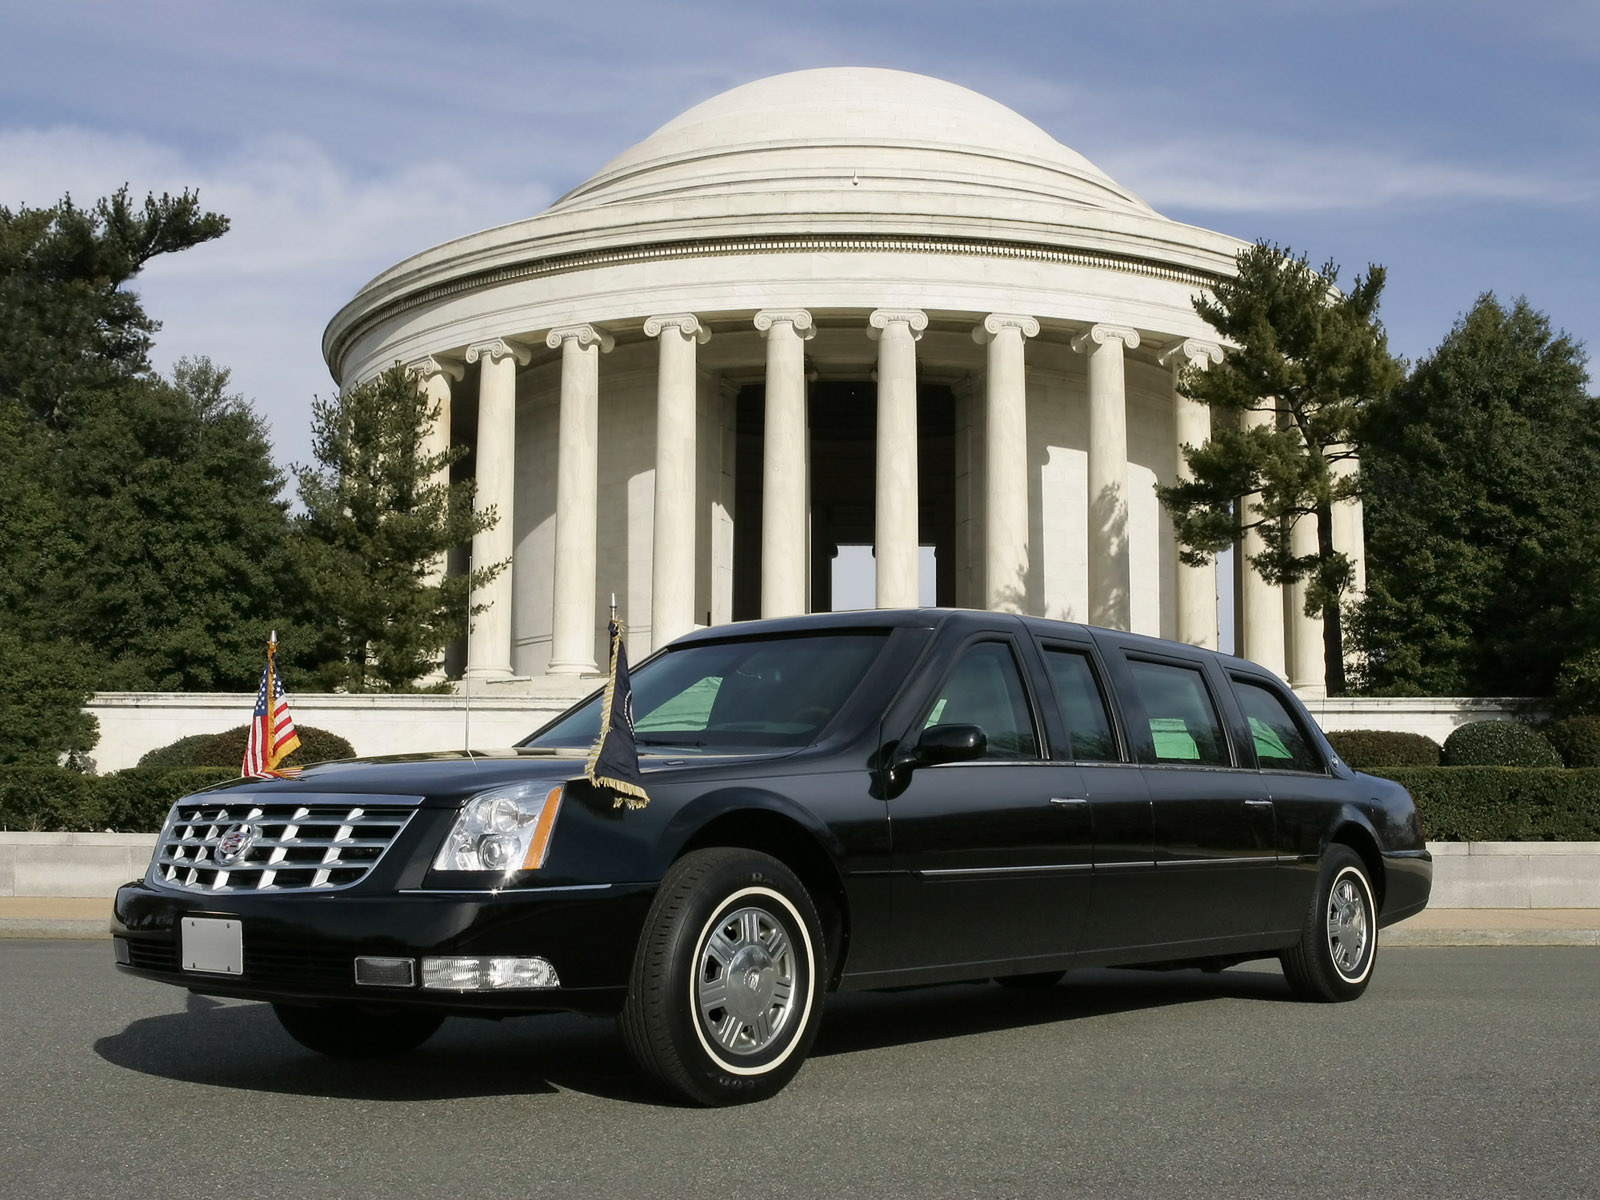 2006-Cadillac-DTS-Presidential-Limousine-Jefferson-Memorial-1600